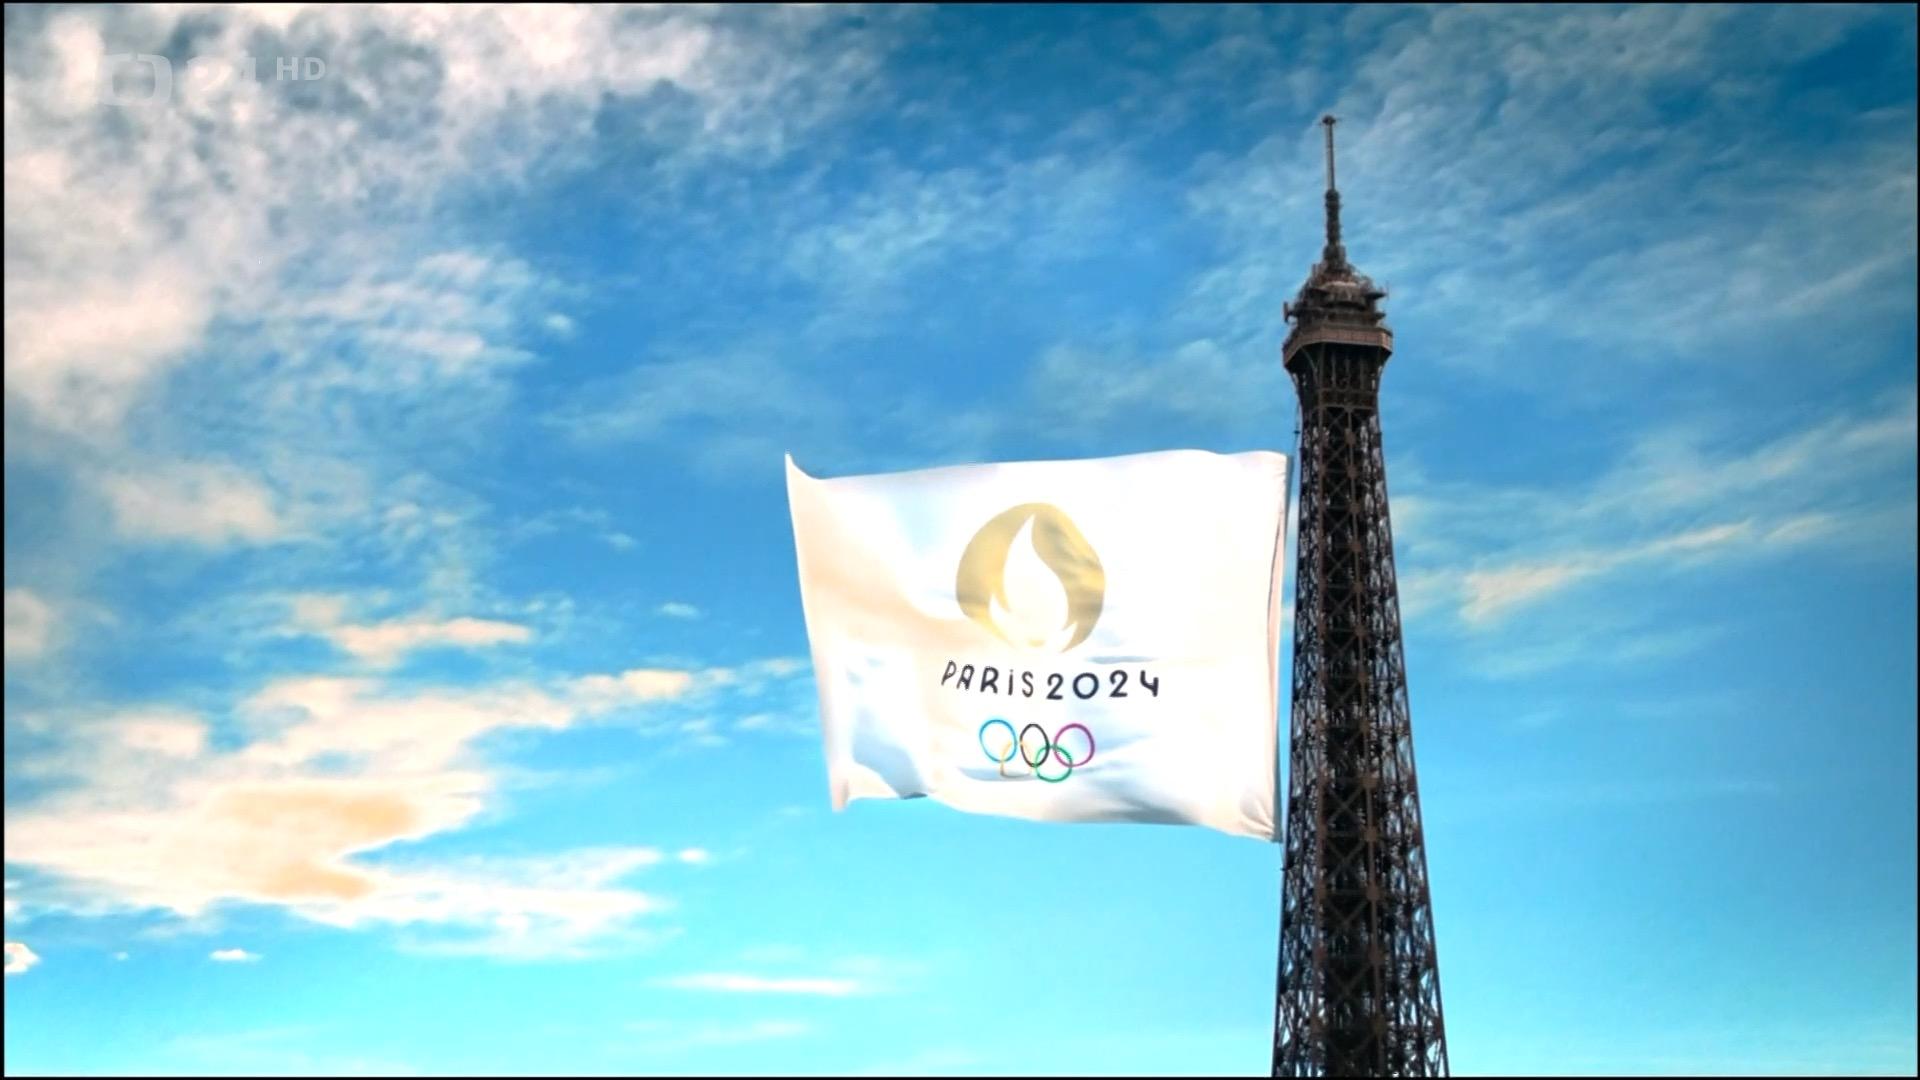 Обои 2024 г. Париж 2024. Олимпийская деревня в Париже 2024.